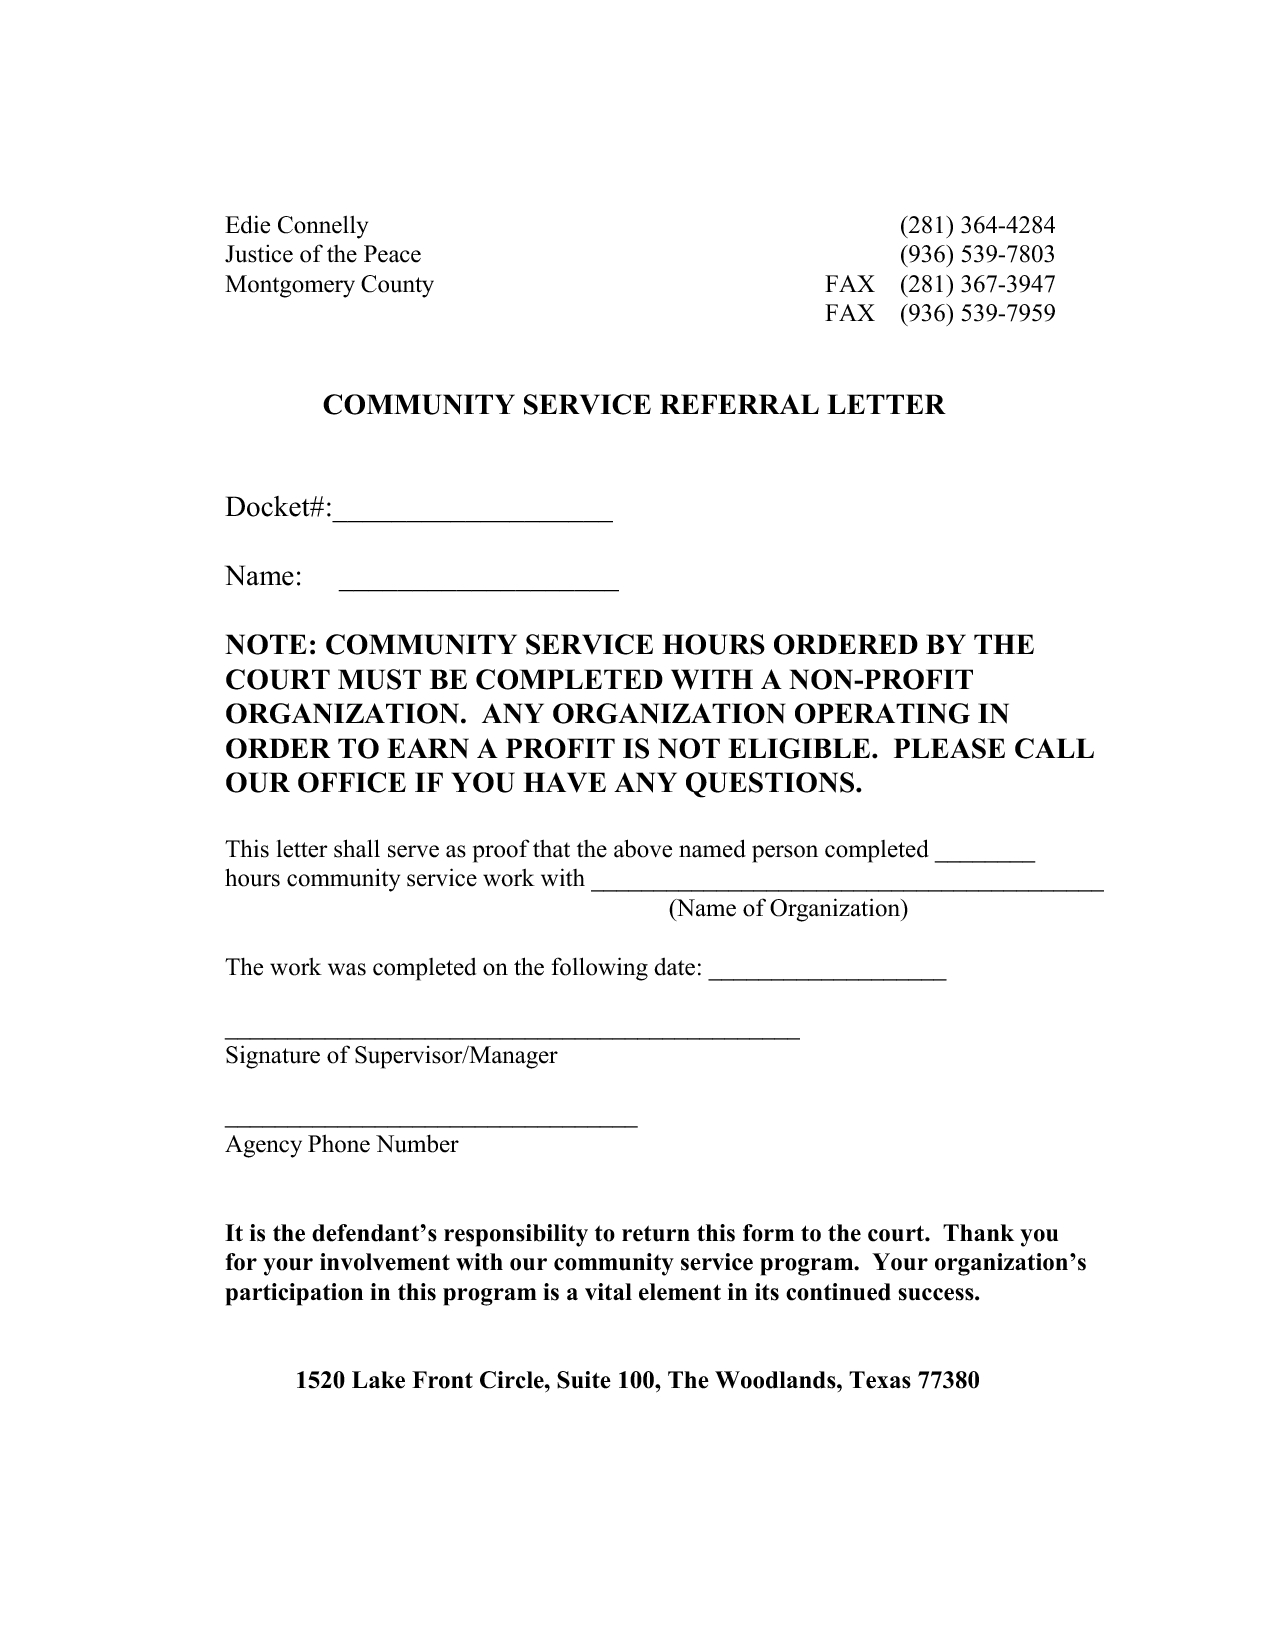 community service completion letter for court   Dean.routechoice.co